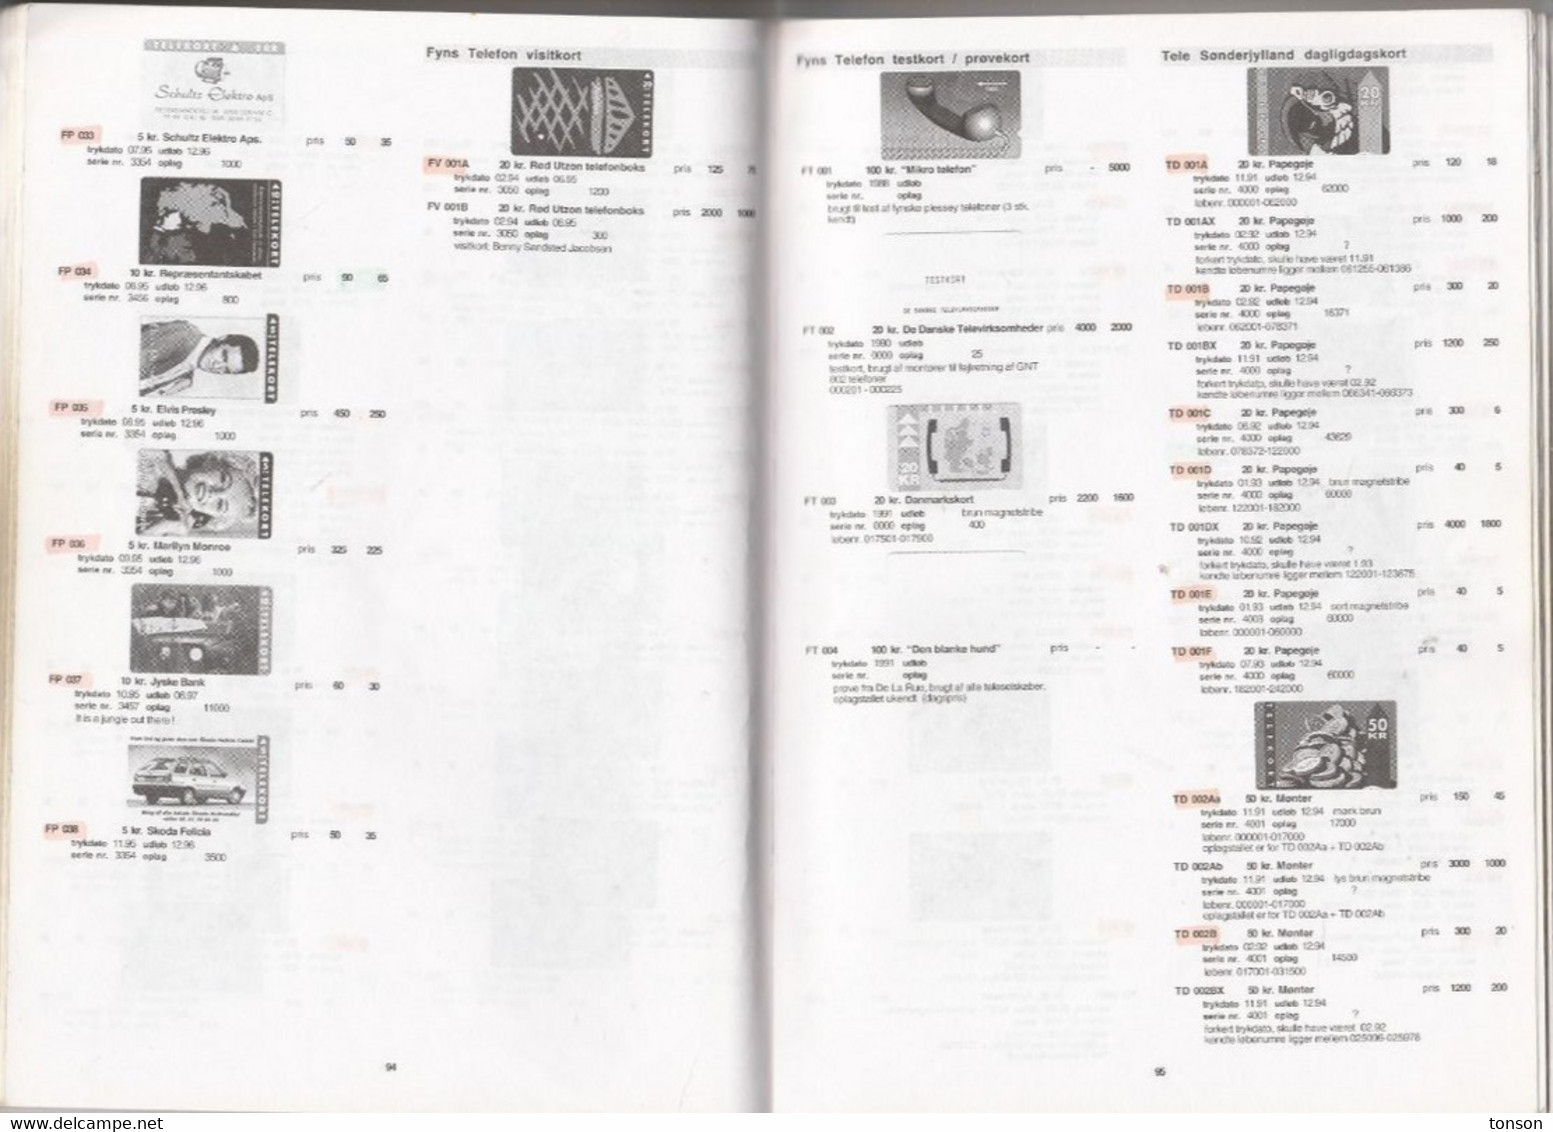 Danish Phonecard Catalogue 2000   4 Scans. - Matériel